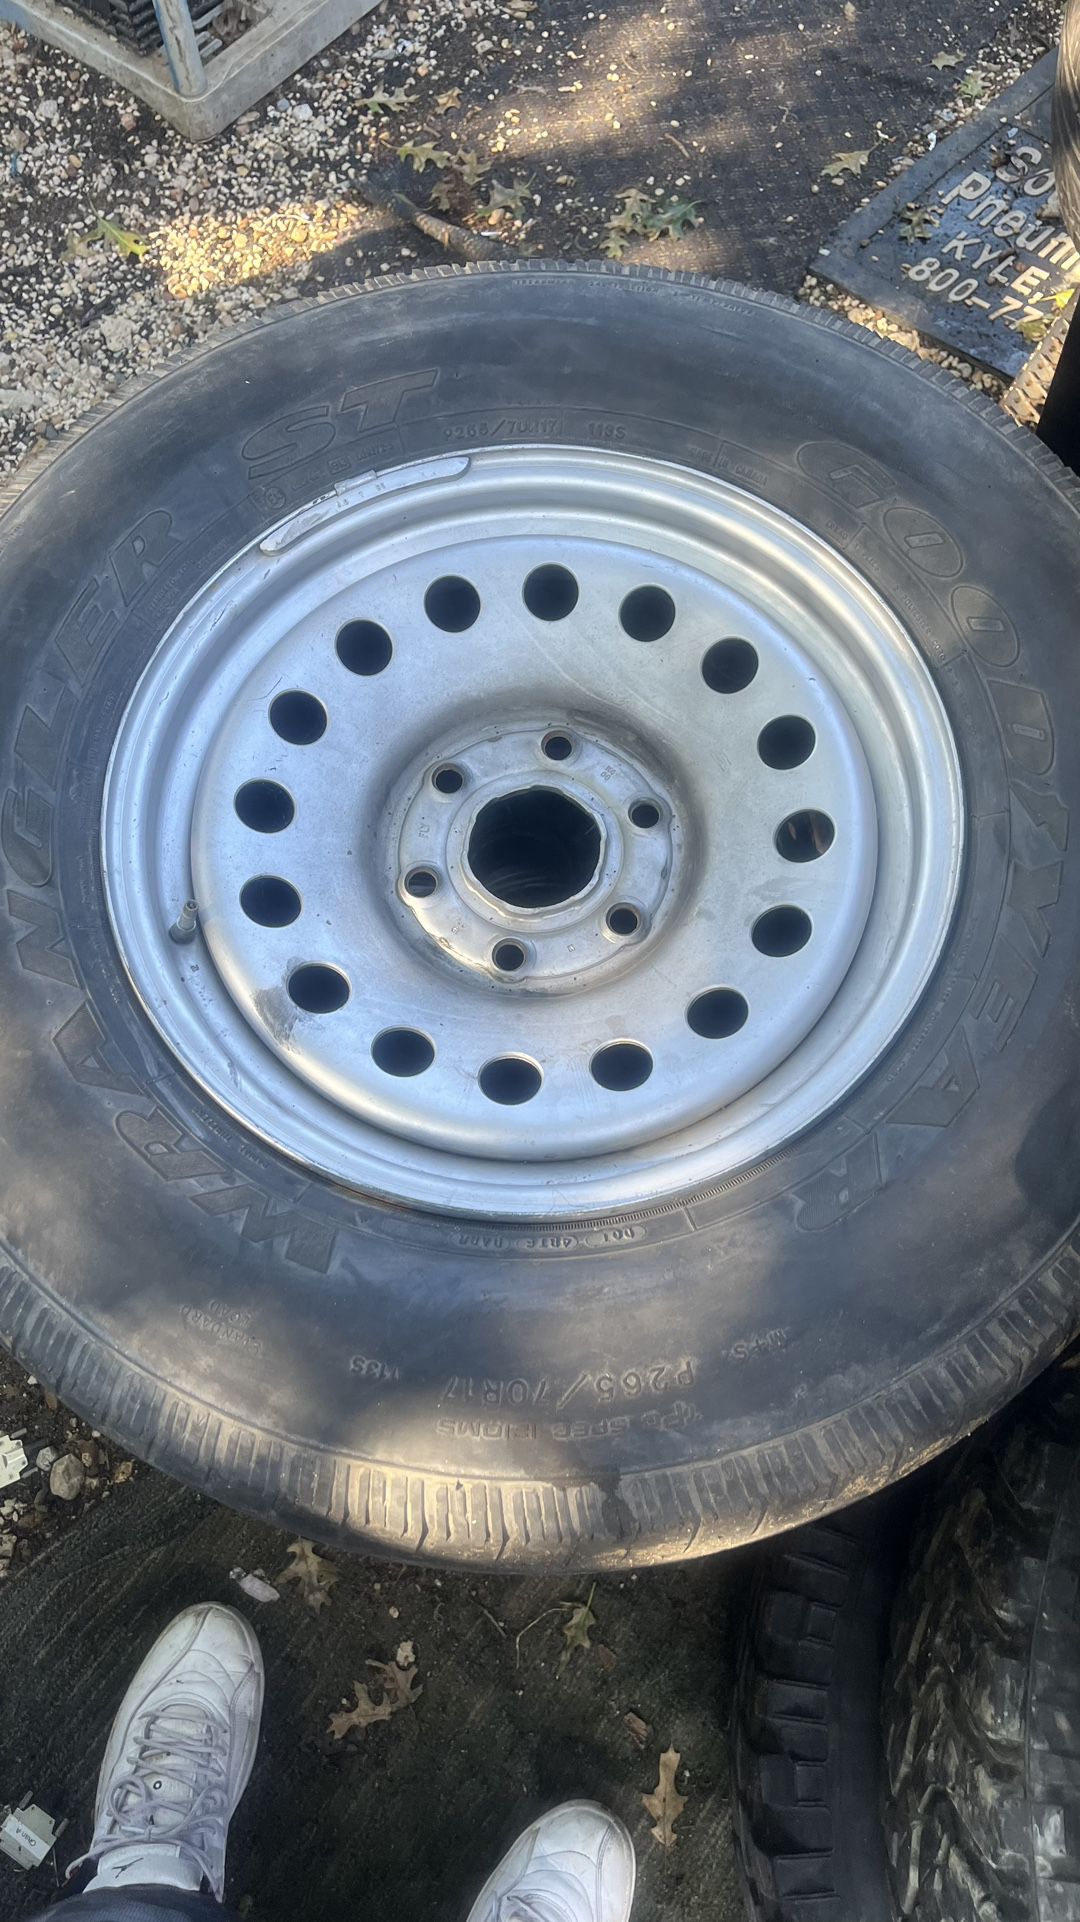 265/70/17 wheel  5 lug , tire no good 